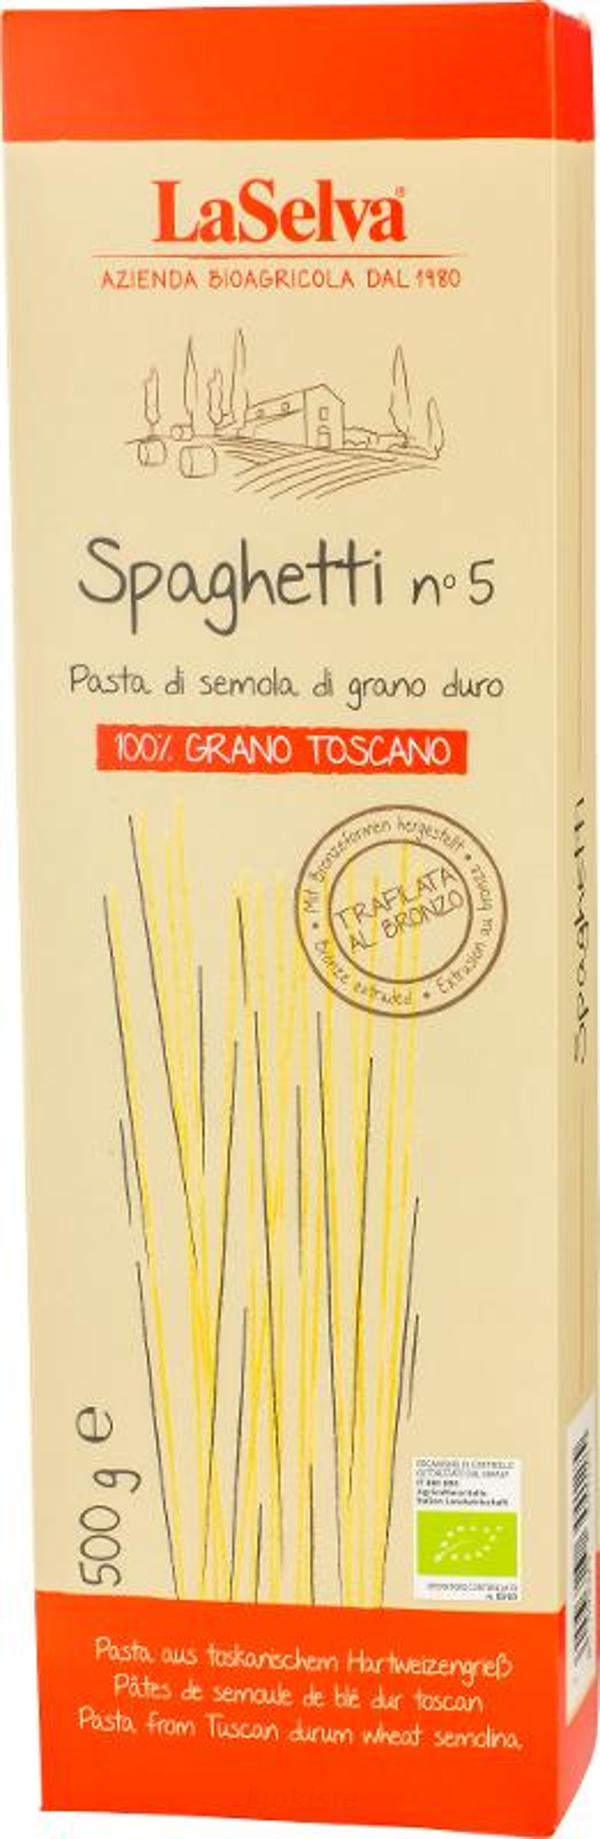 Produktfoto zu Spaghetti Nr. 5 Pasta Toscana 500 g